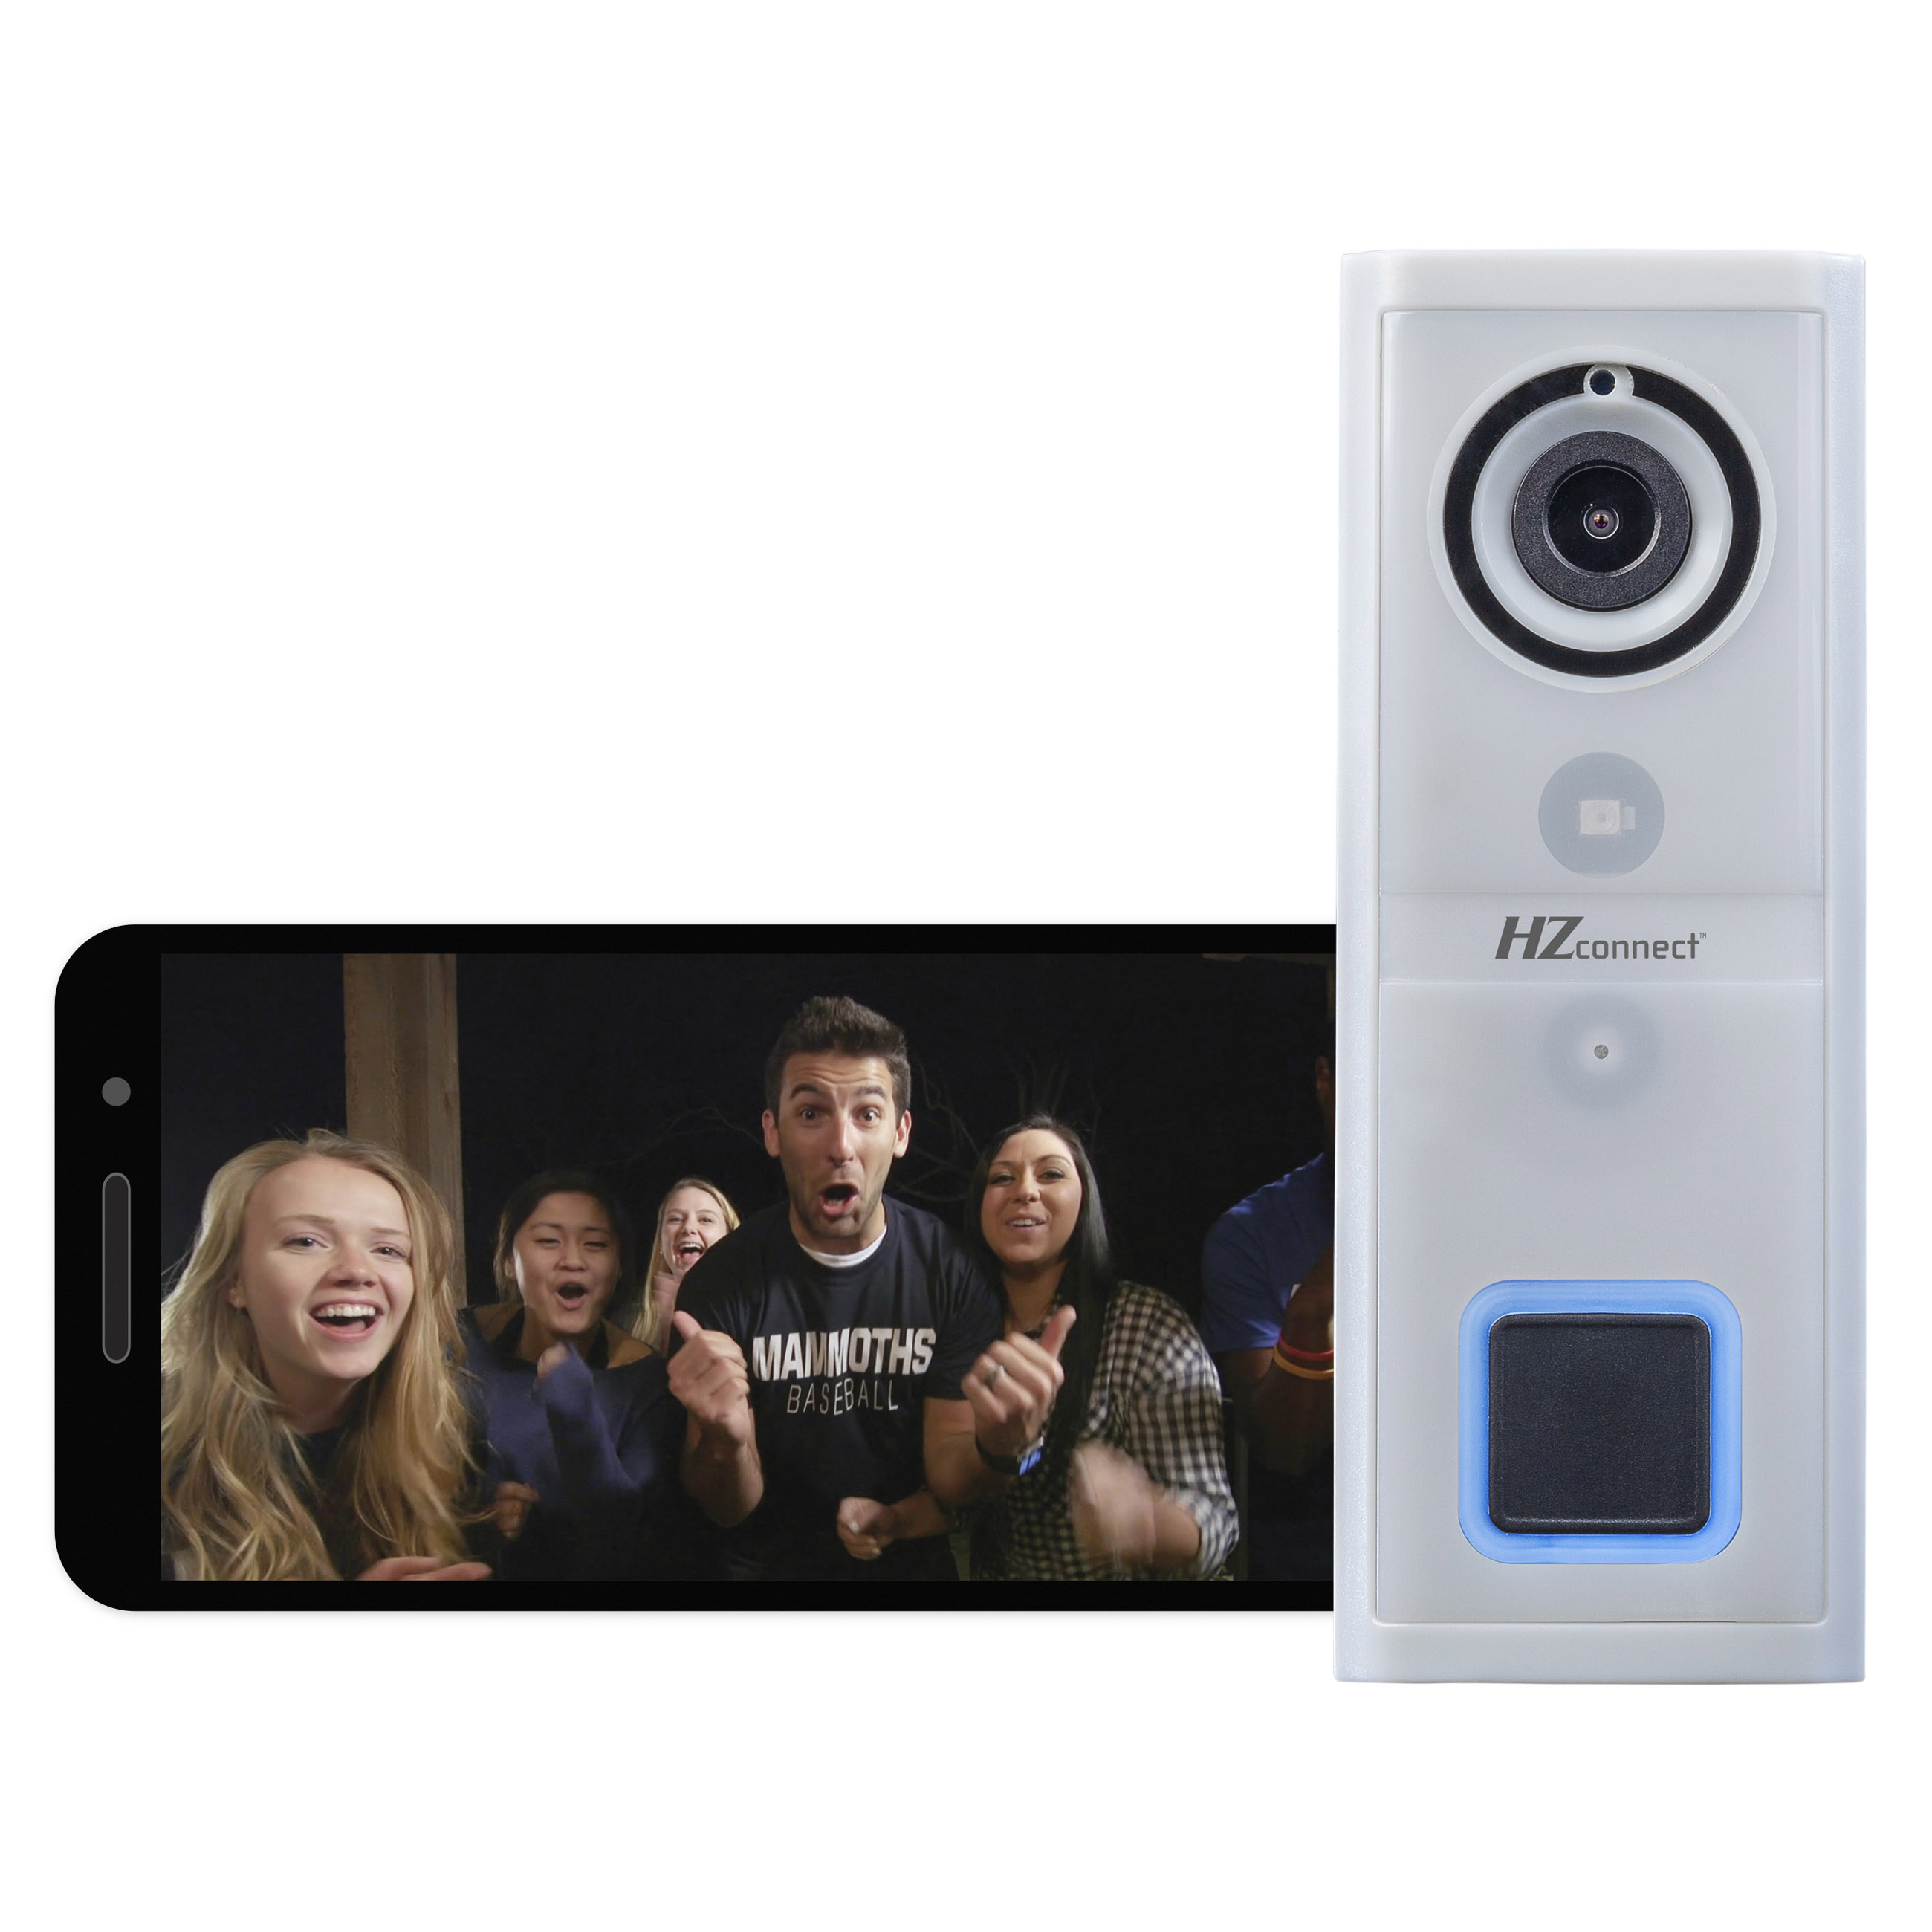 Hzconnect SL-9601-00 Smart Doorbell Motion Sensor, Surface Mounting, Black/Gray